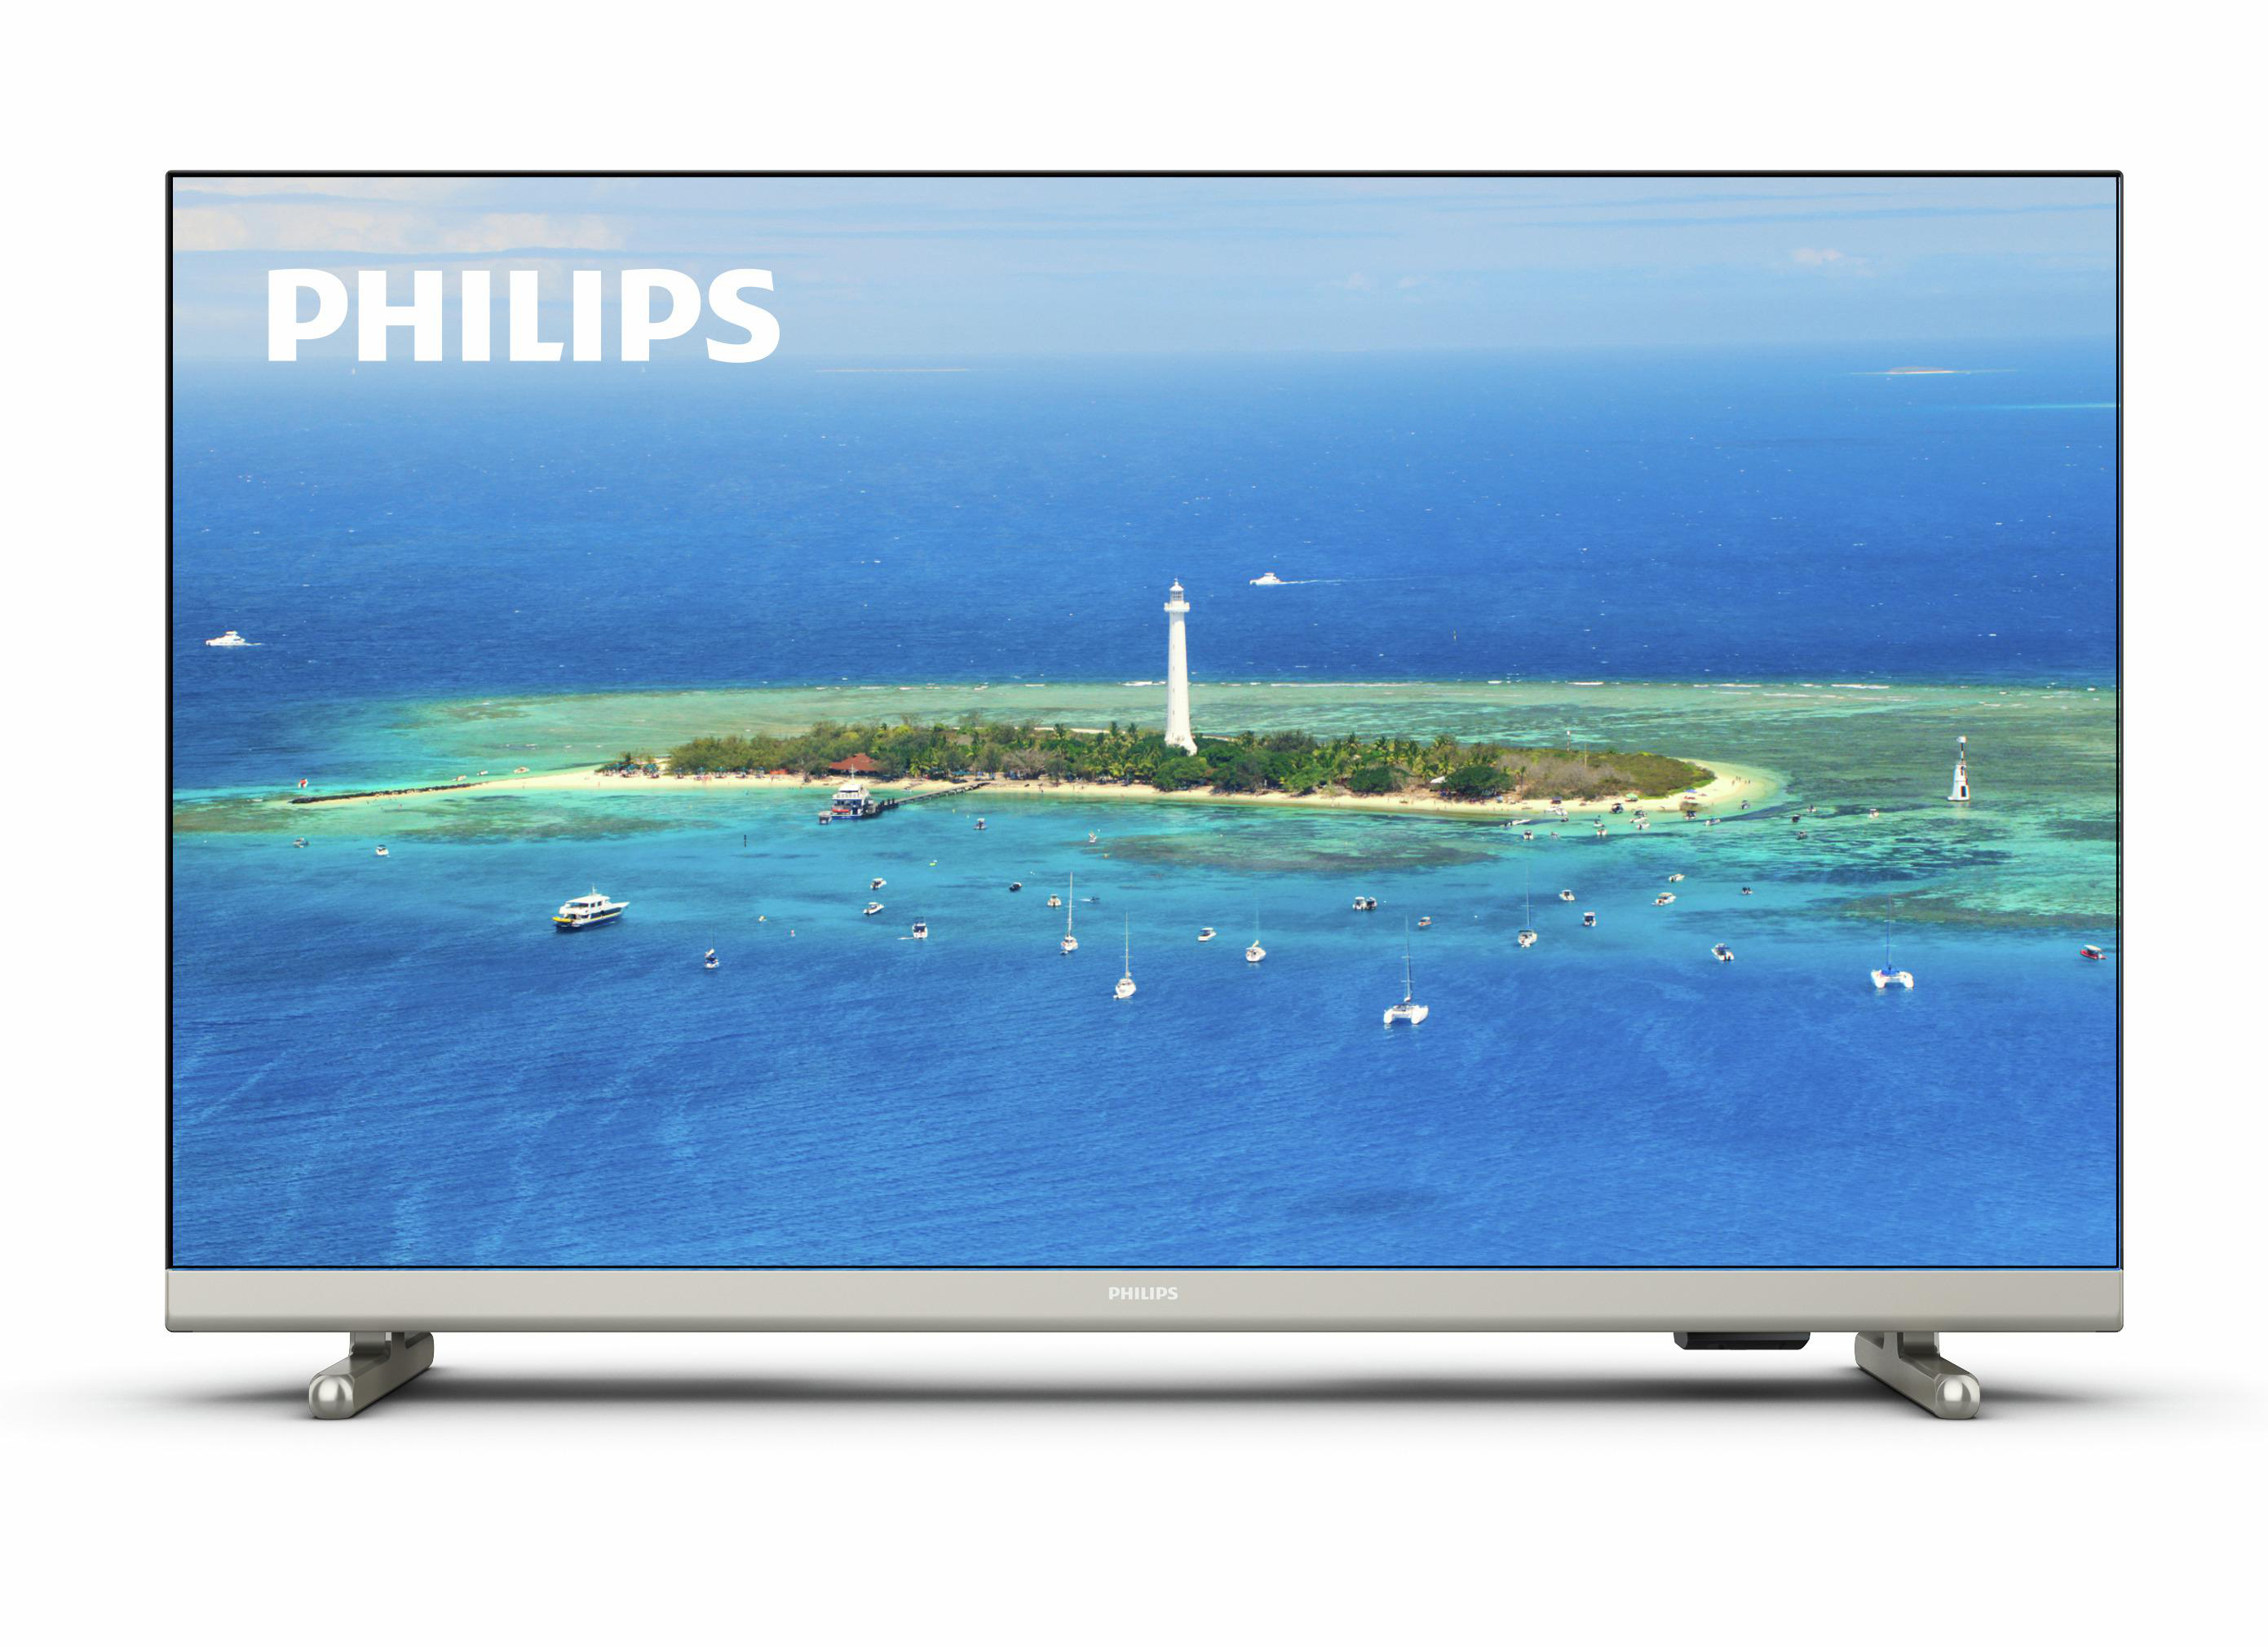 TV HD) 80 32 Zoll) (32 cm, (Flat, / PHILIPS 32PHS5527/12 LED Zoll